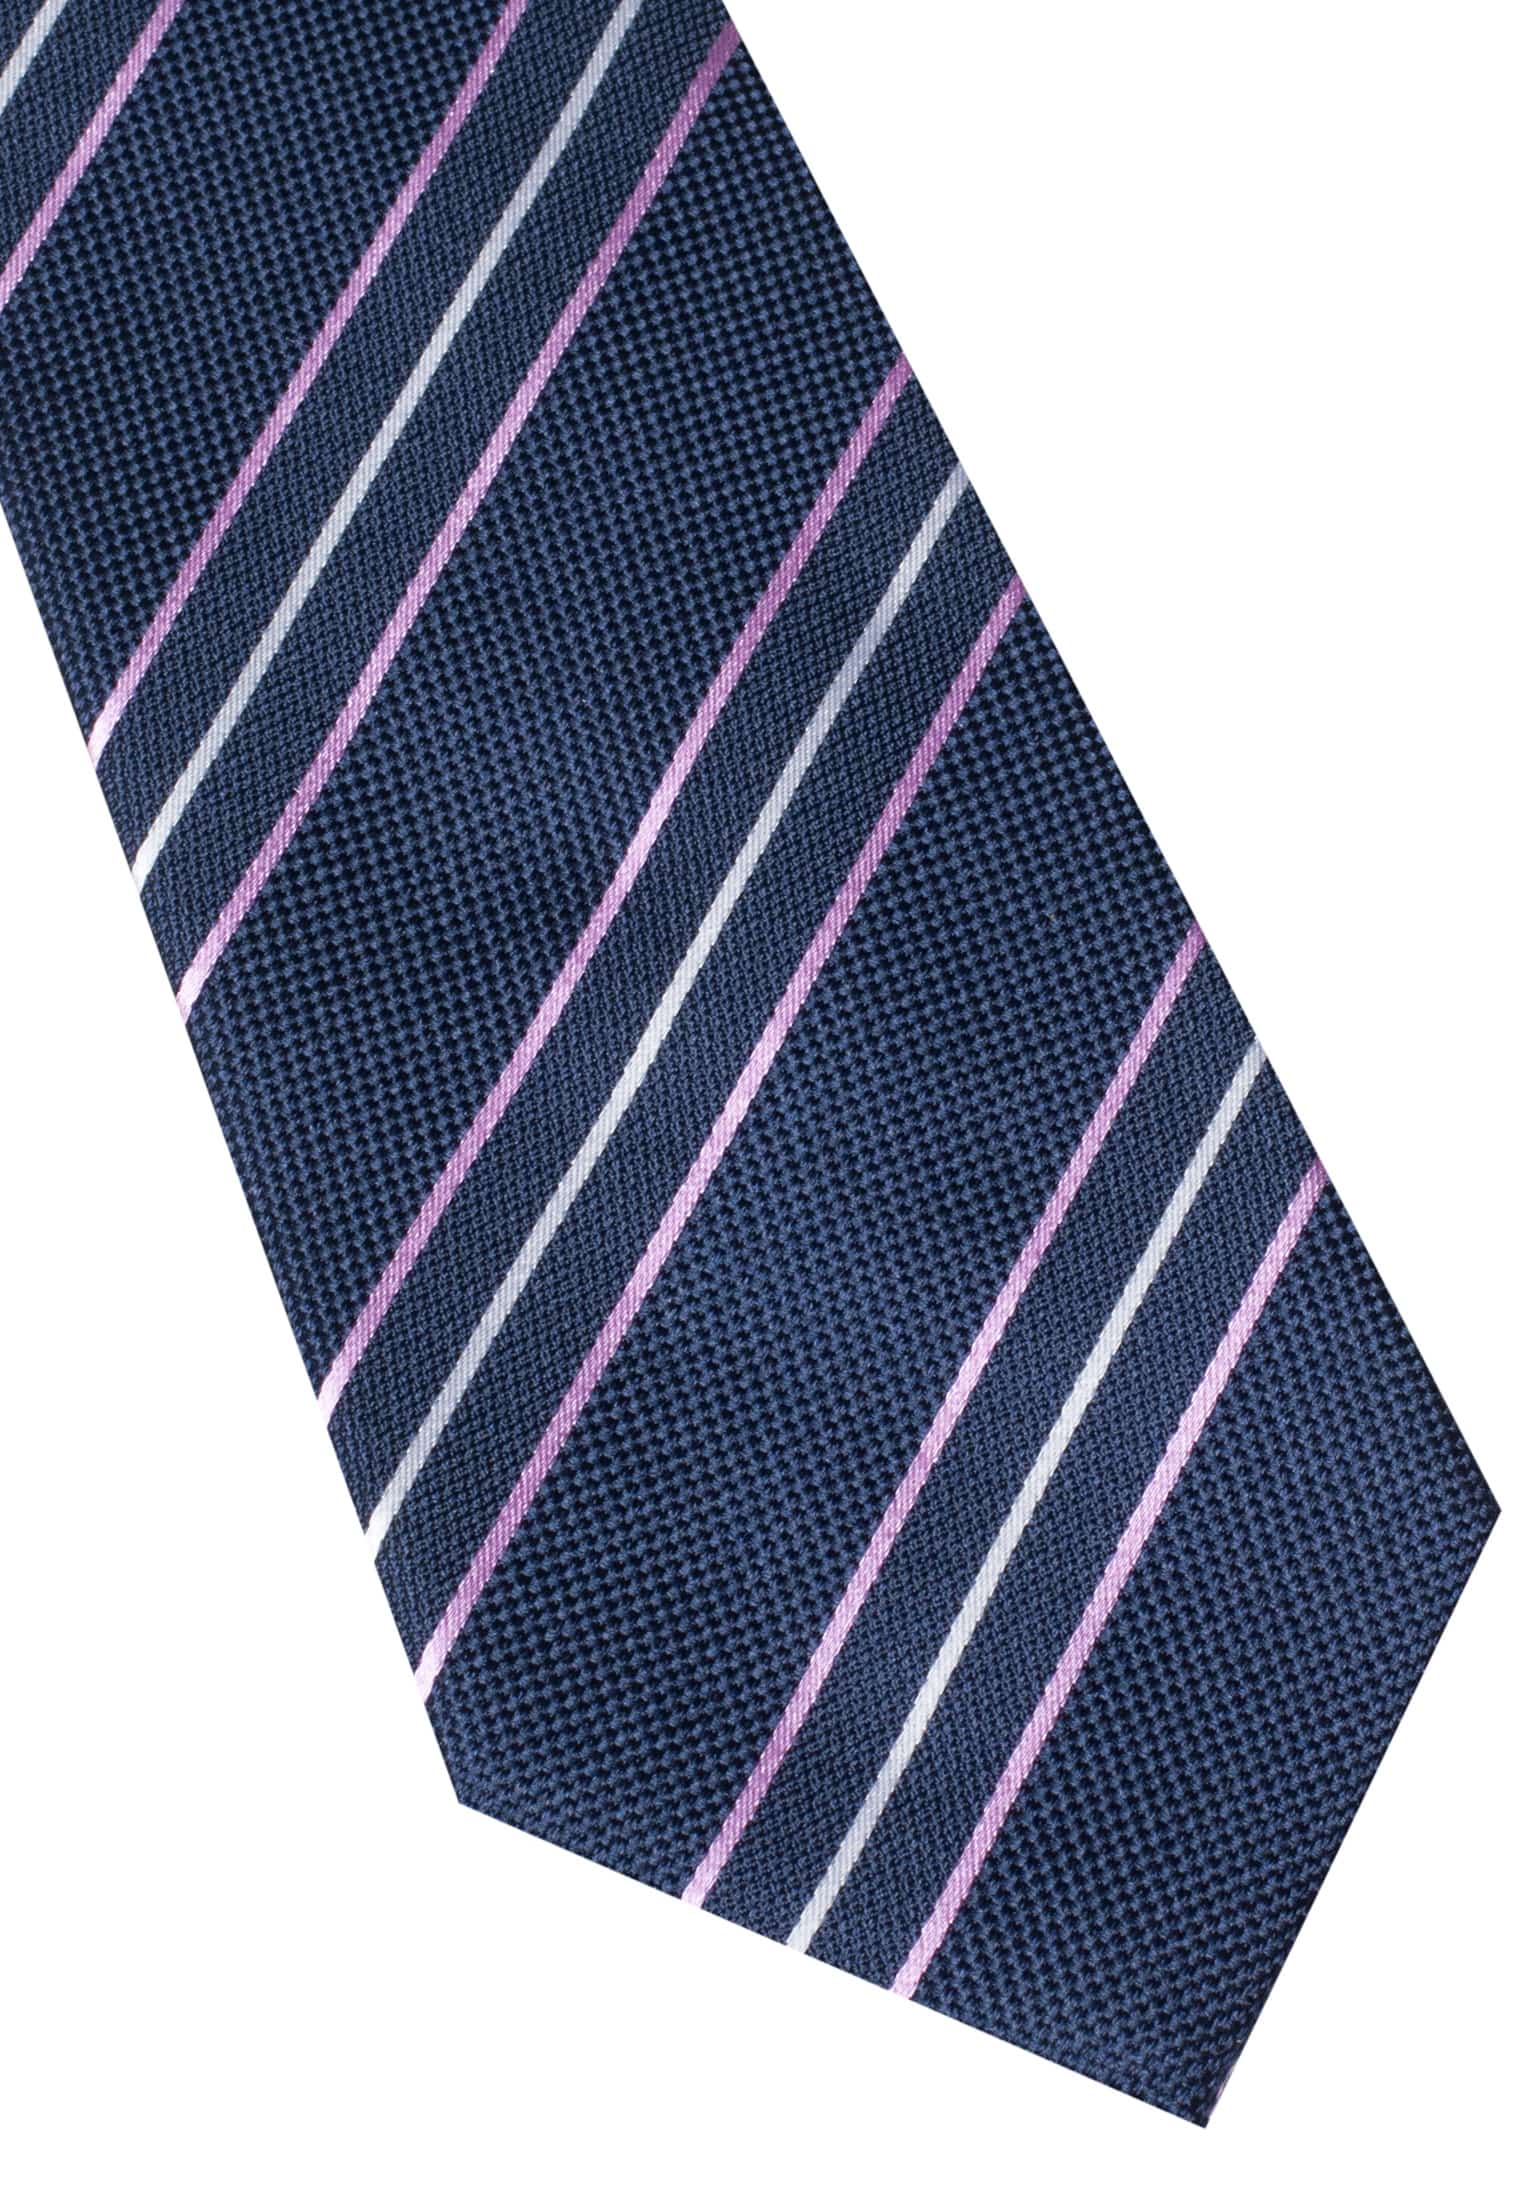 Krawatte in navy/rosa gestreift | | 142 1AC00533-81-90-142 navy/rosa 